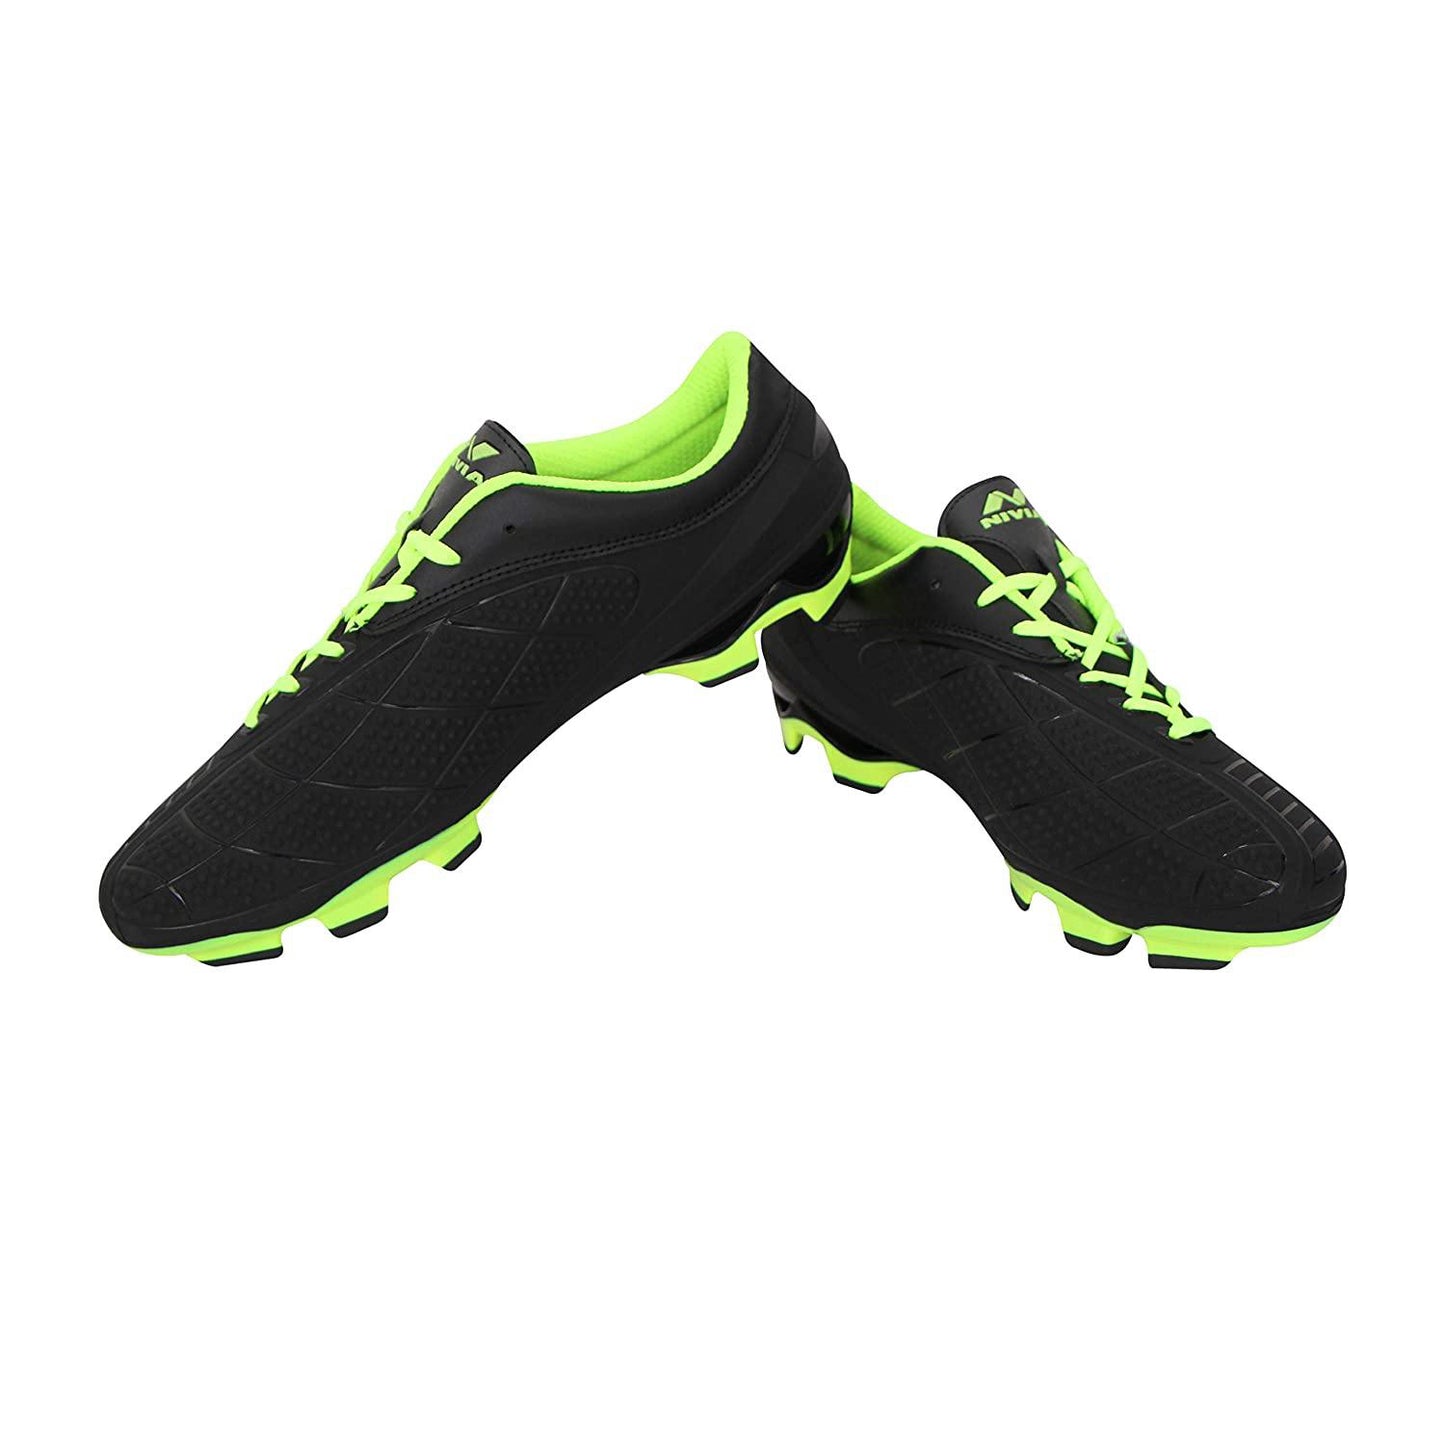 Nivia Dominator 2.0 Football Studs, Black/Green - Best Price online Prokicksports.com